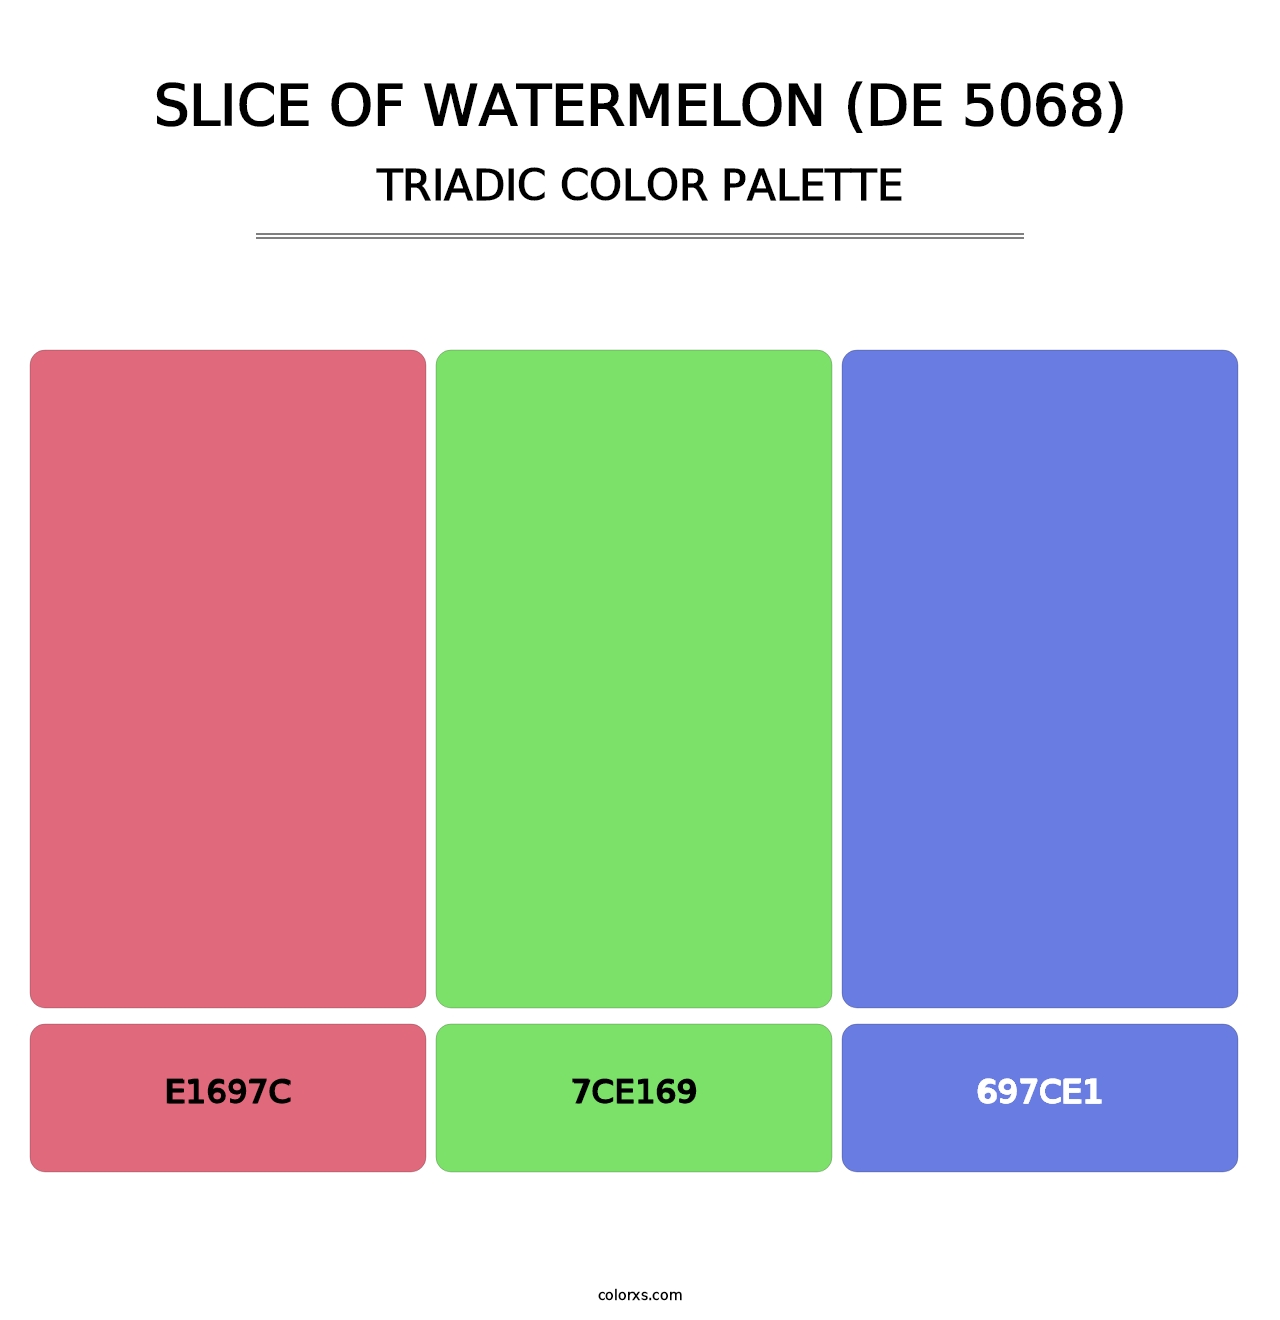 Slice of Watermelon (DE 5068) - Triadic Color Palette